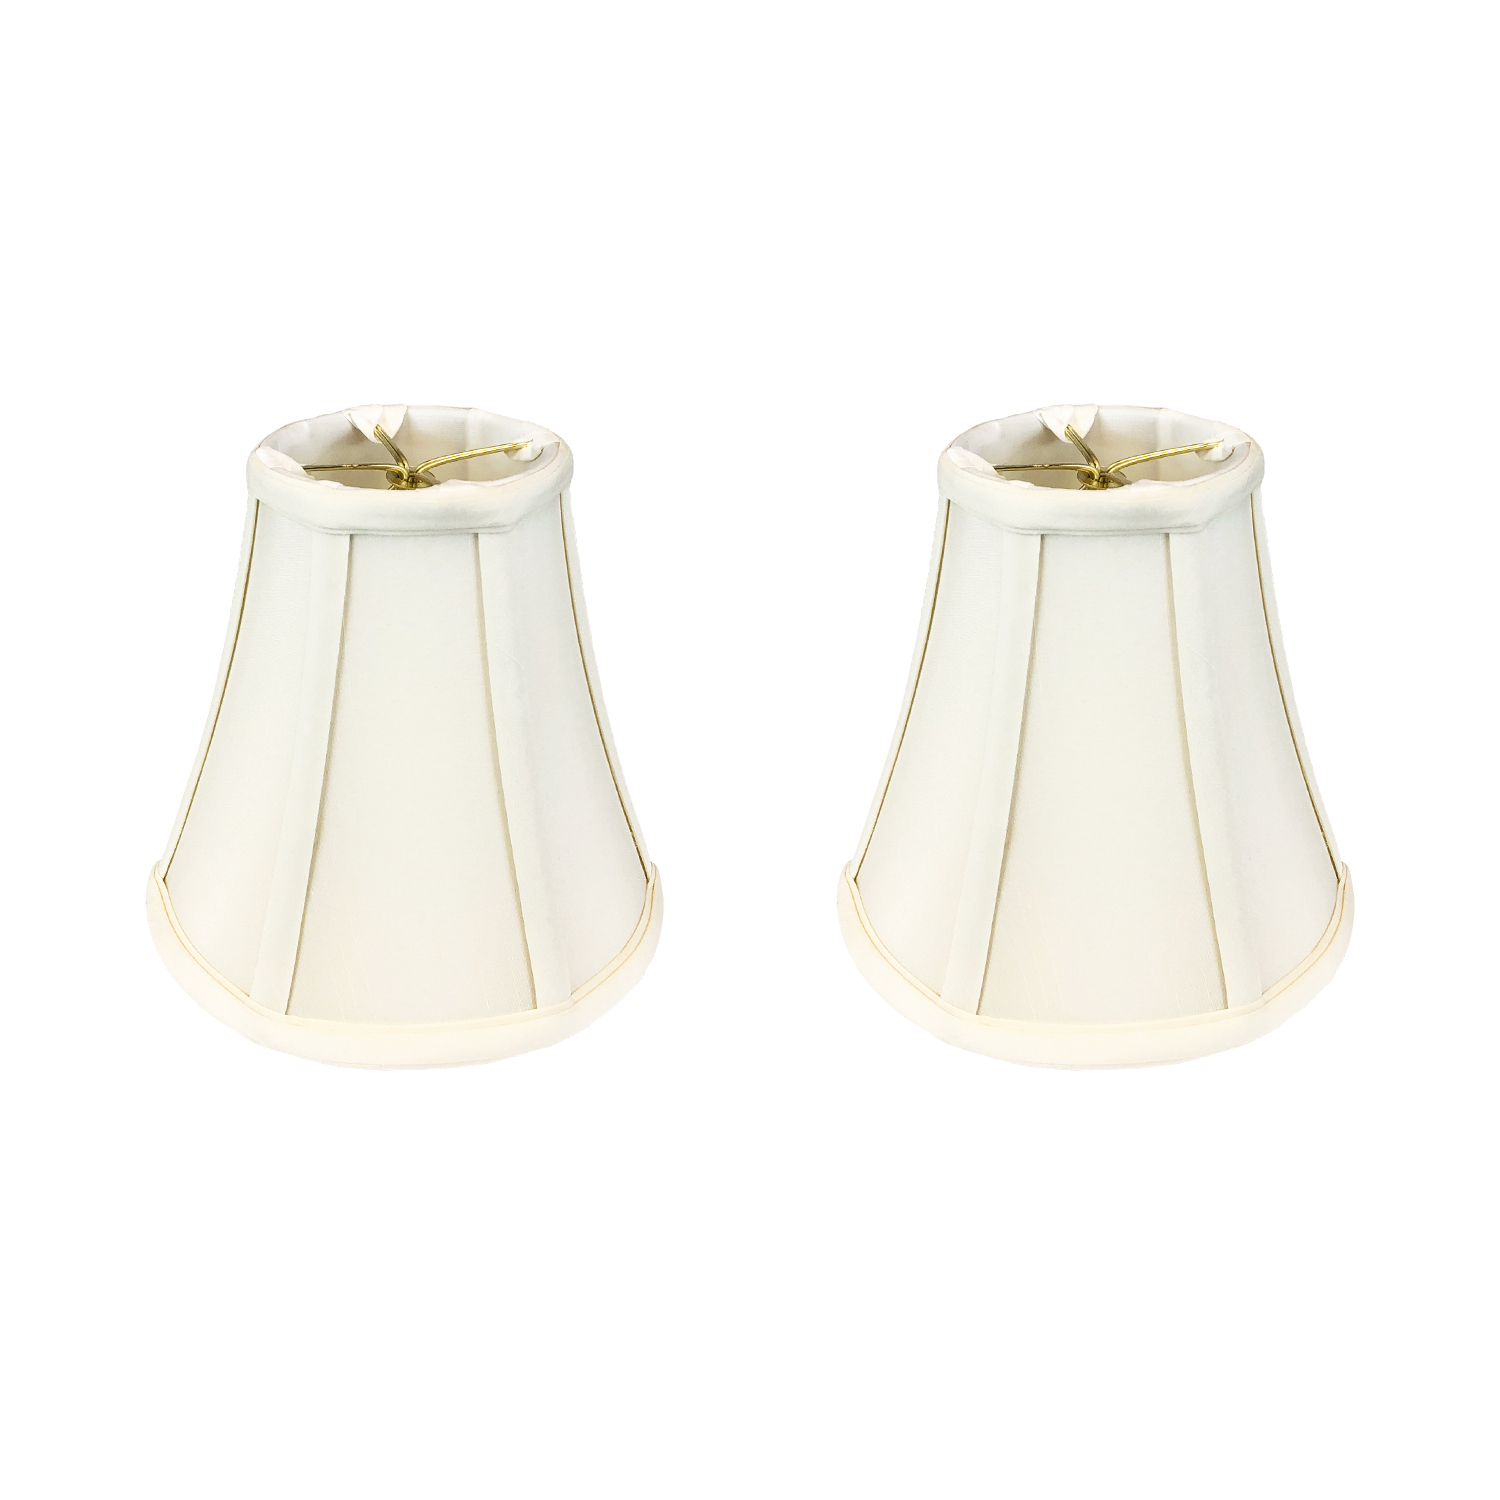 Royal Designs True Bell Basic Lamp Shade, Eggshell, 3.75 x 7 x 6.75, Set of 2